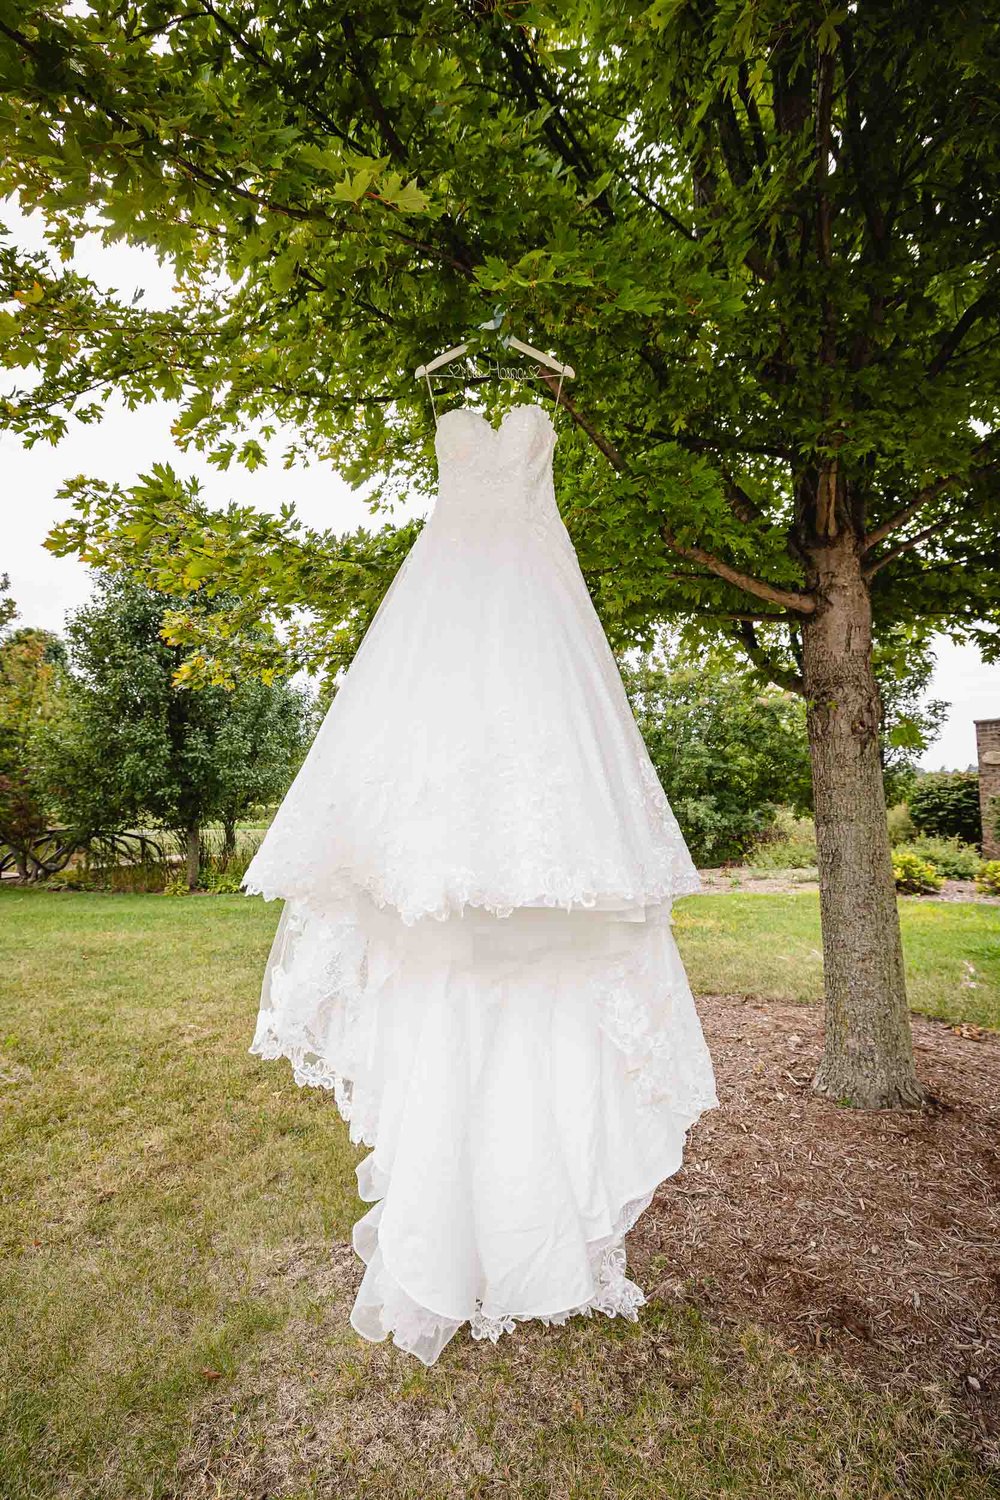 Wedding Dress haging in tree